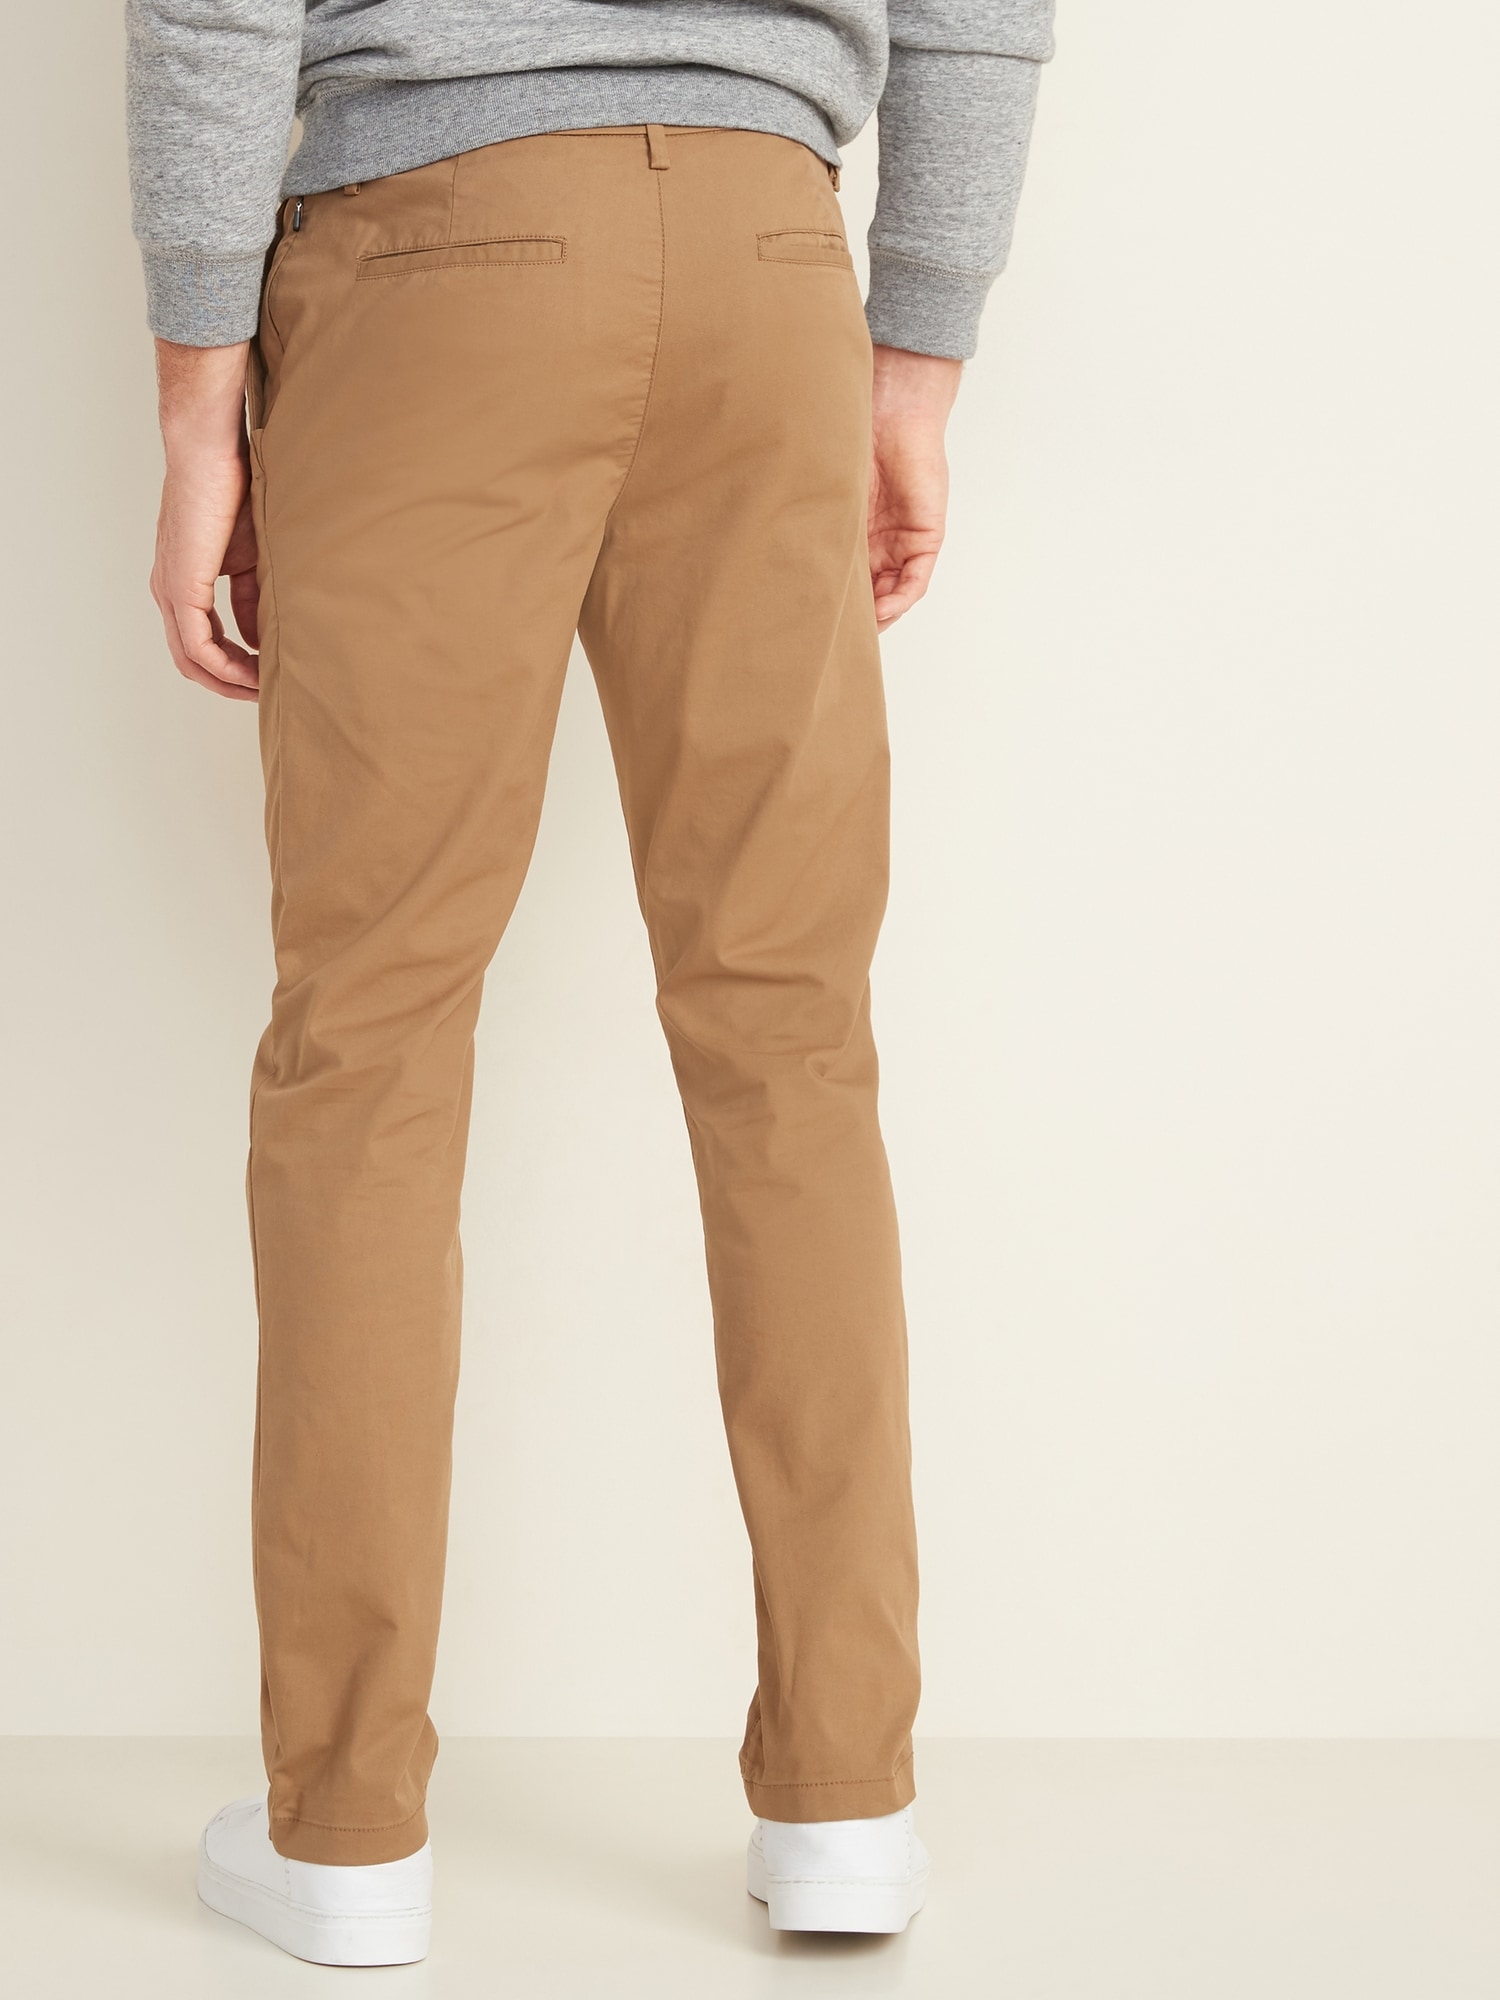 Amazon.com: Boy's Black Chino Pants School Uniform Skinny Fit Solid Color  Stretch Fashion Dress Pants,1094,8: Clothing, Shoes & Jewelry